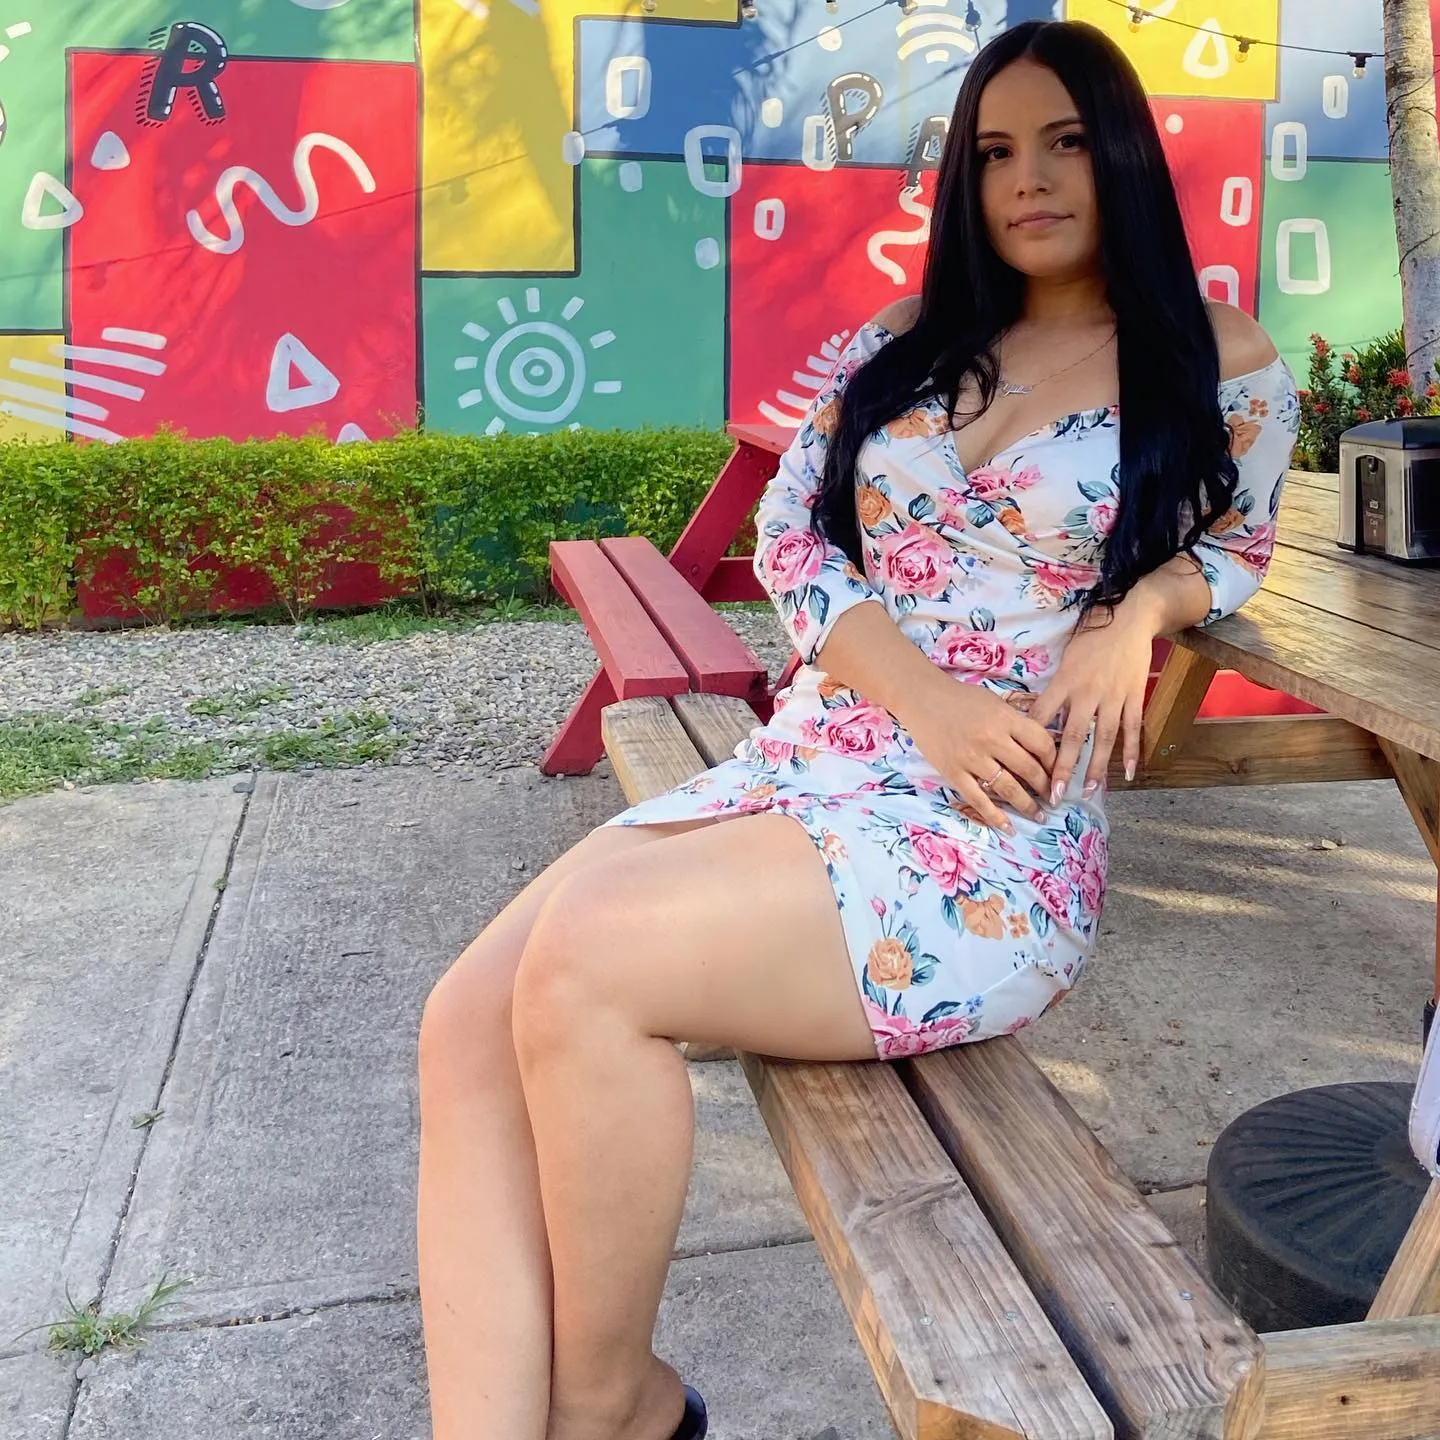 Yulia elisa posas - Most Beautiful Honduran Instagram Models - Female Social Influencer in Honduras Rising Star